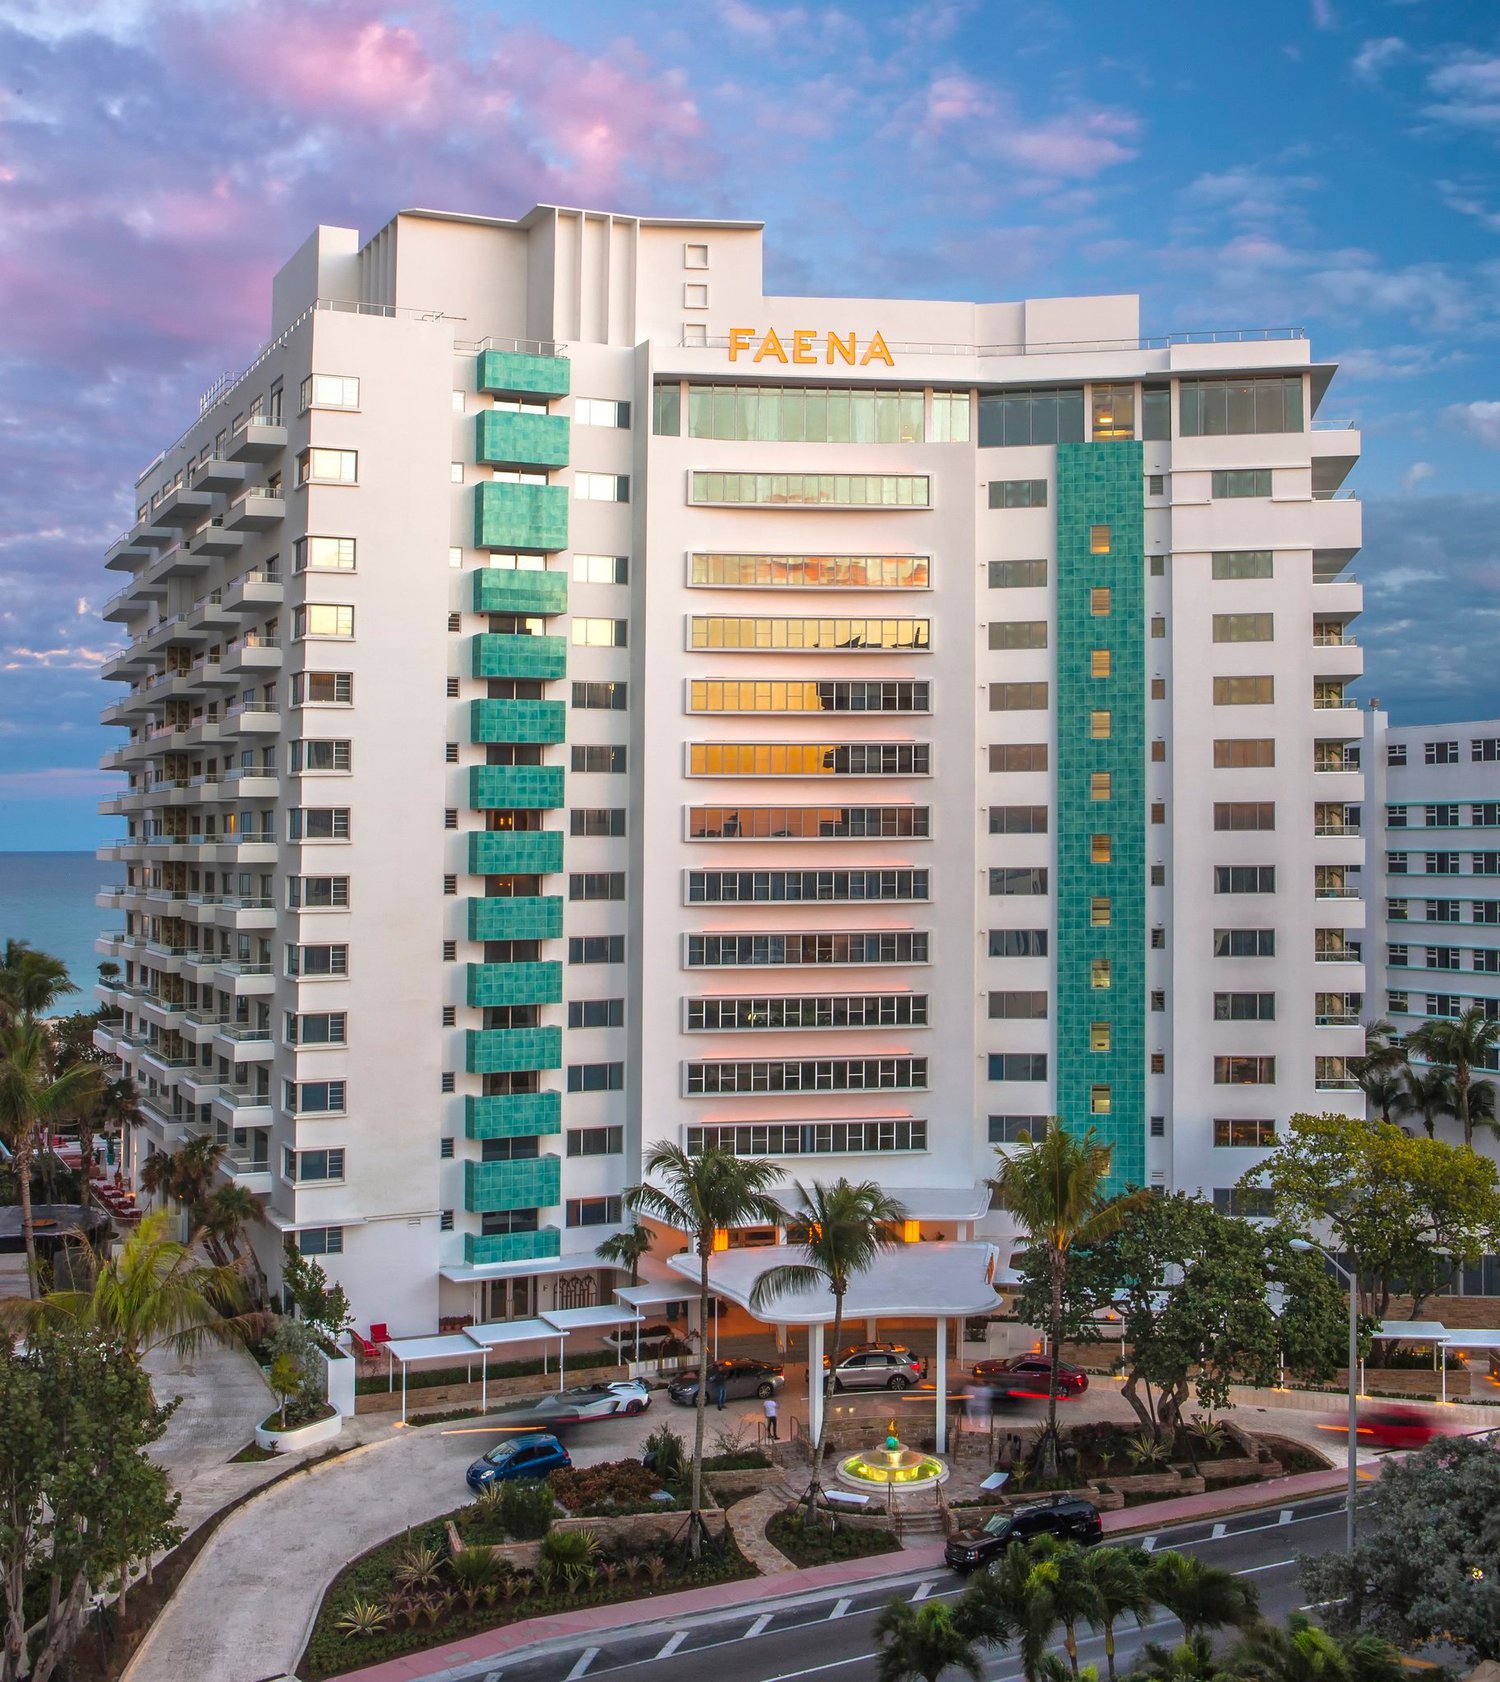 Faena Hotel Miami Beach, Miami Beach, FL Jobs | Hospitality Online